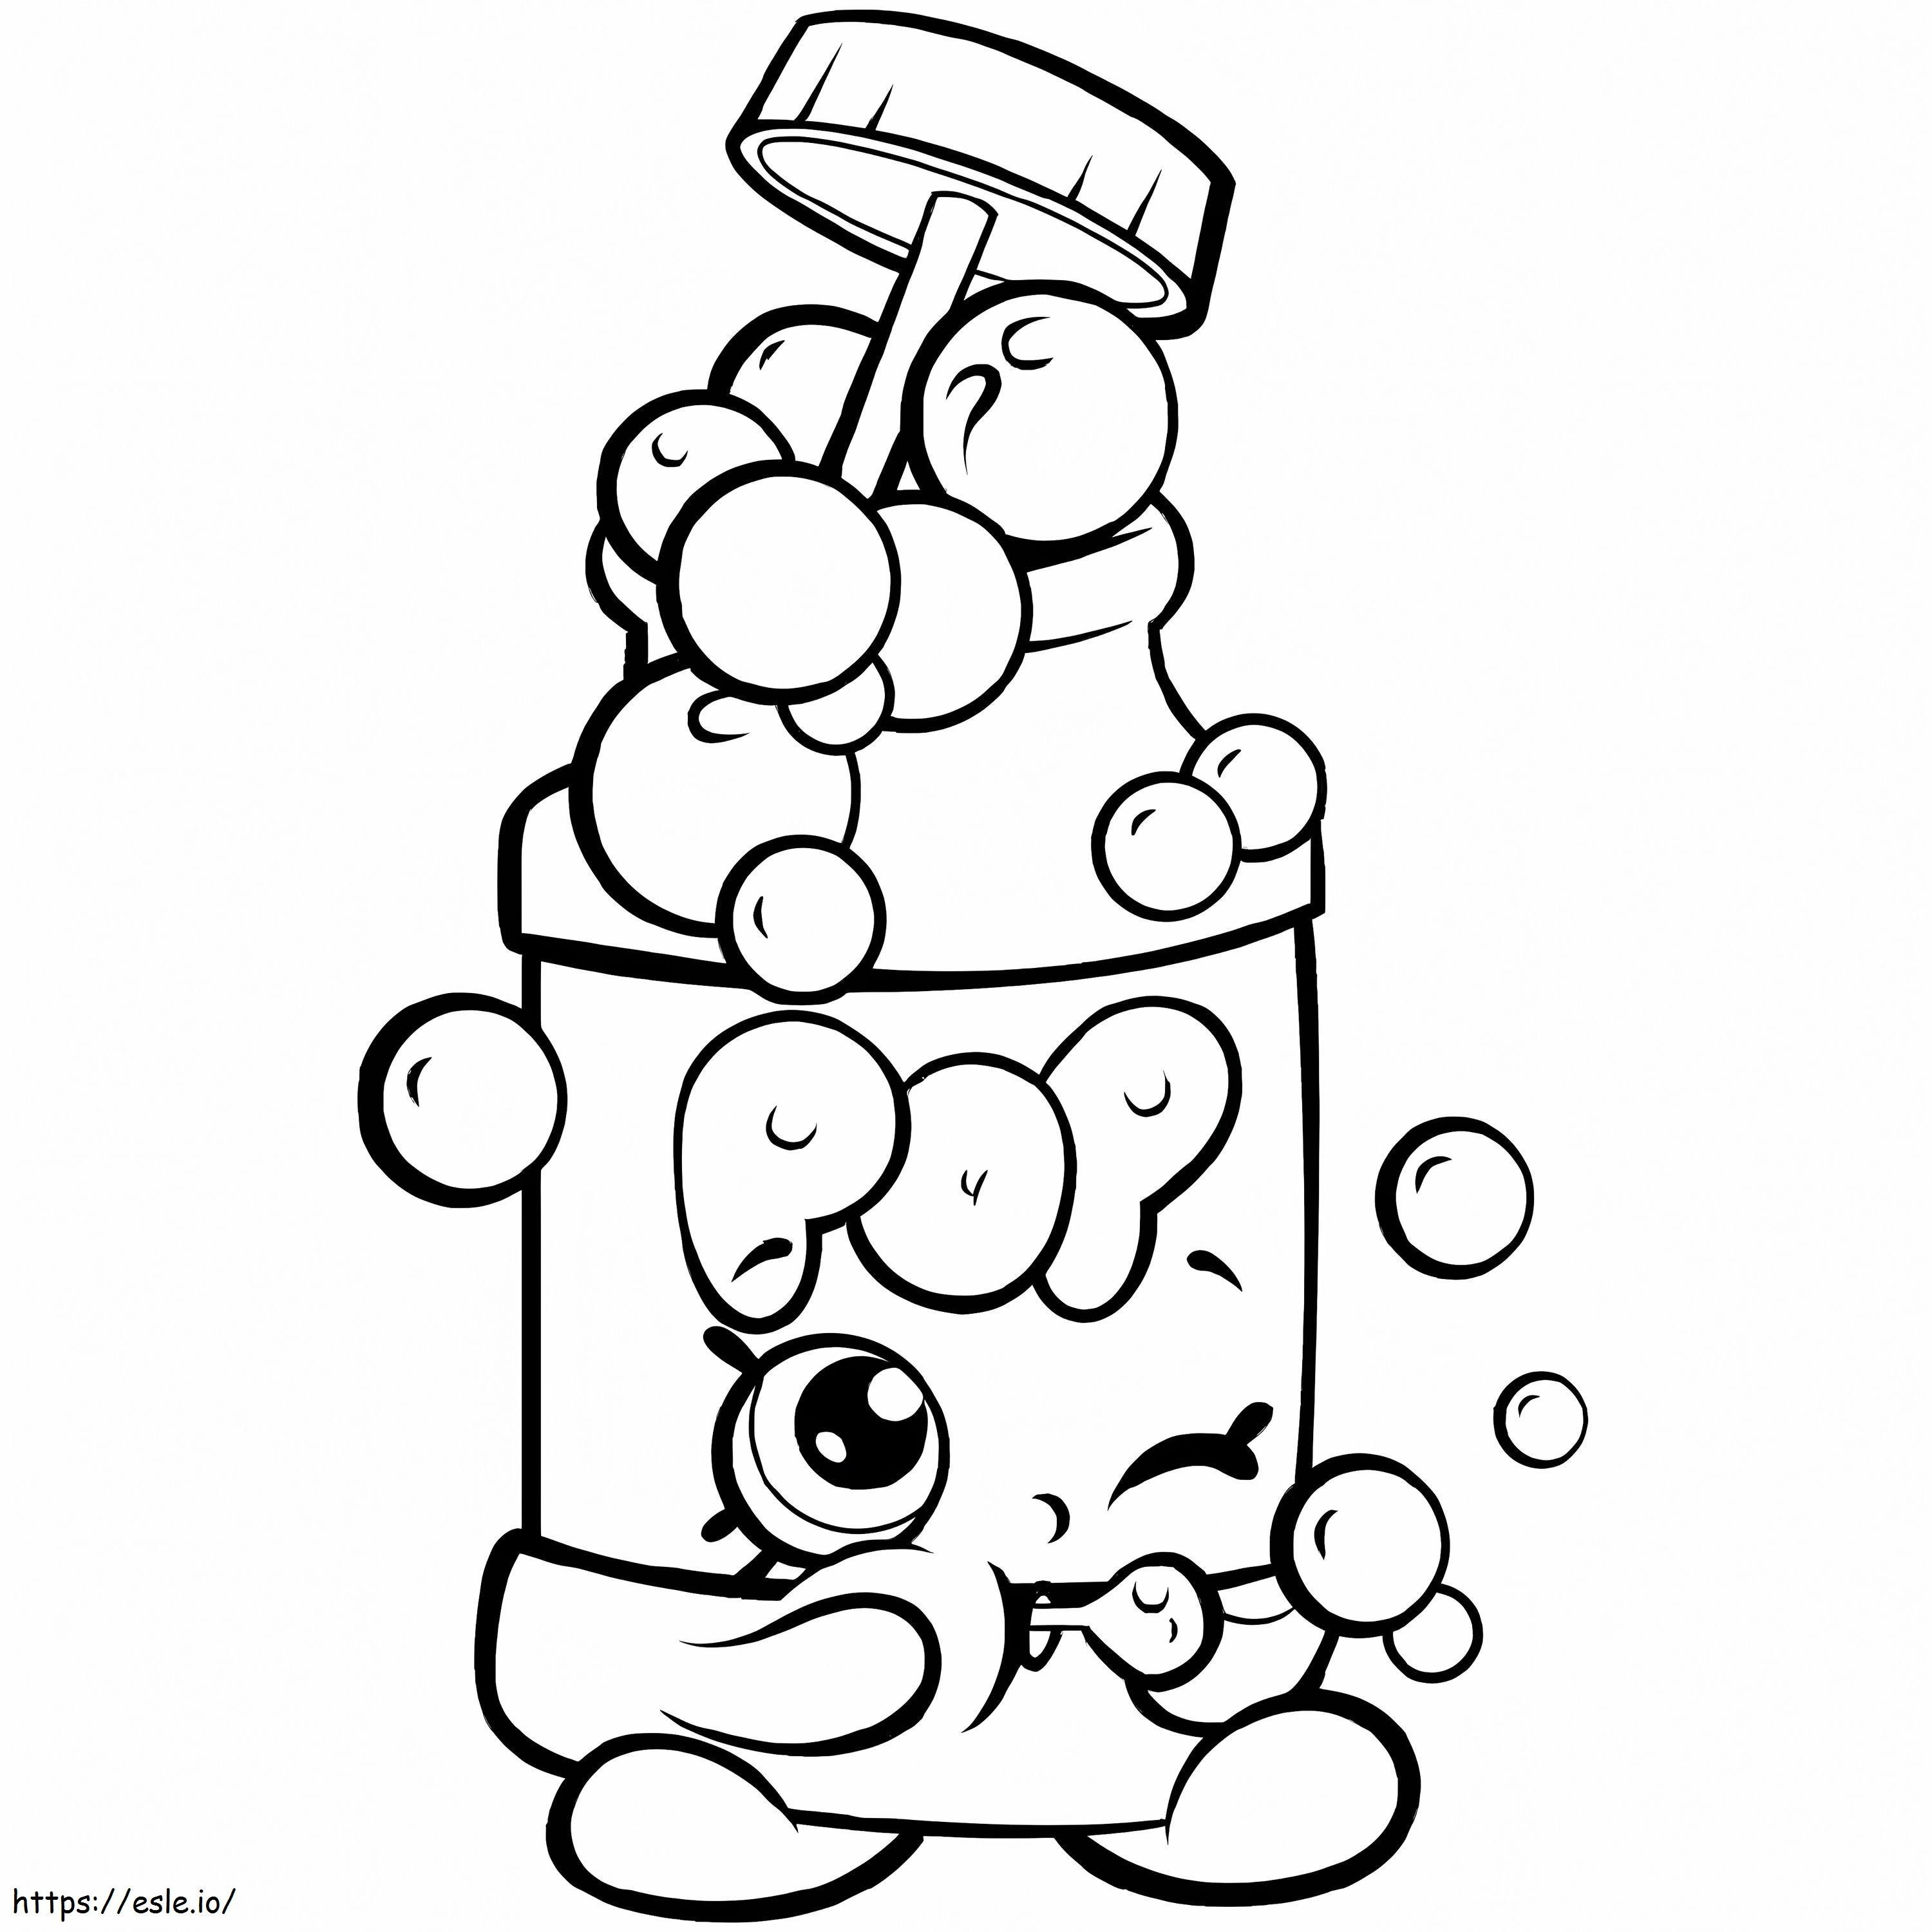 Pops Shopkin Bubble Blower coloring page